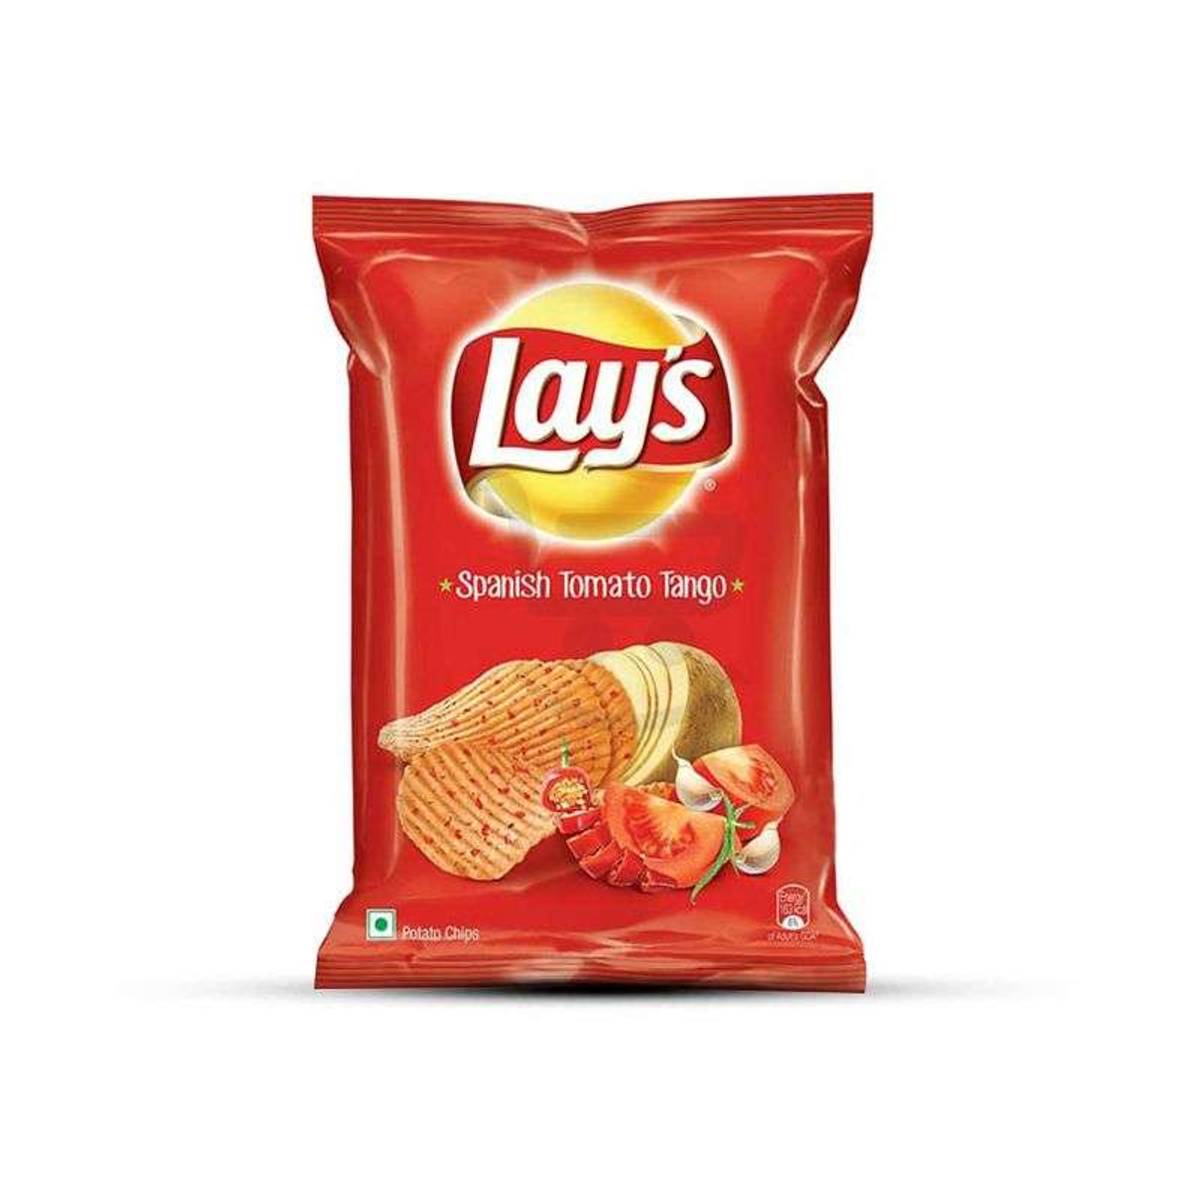 Lays Potato Chips - Spanish Tomato Tango,24g